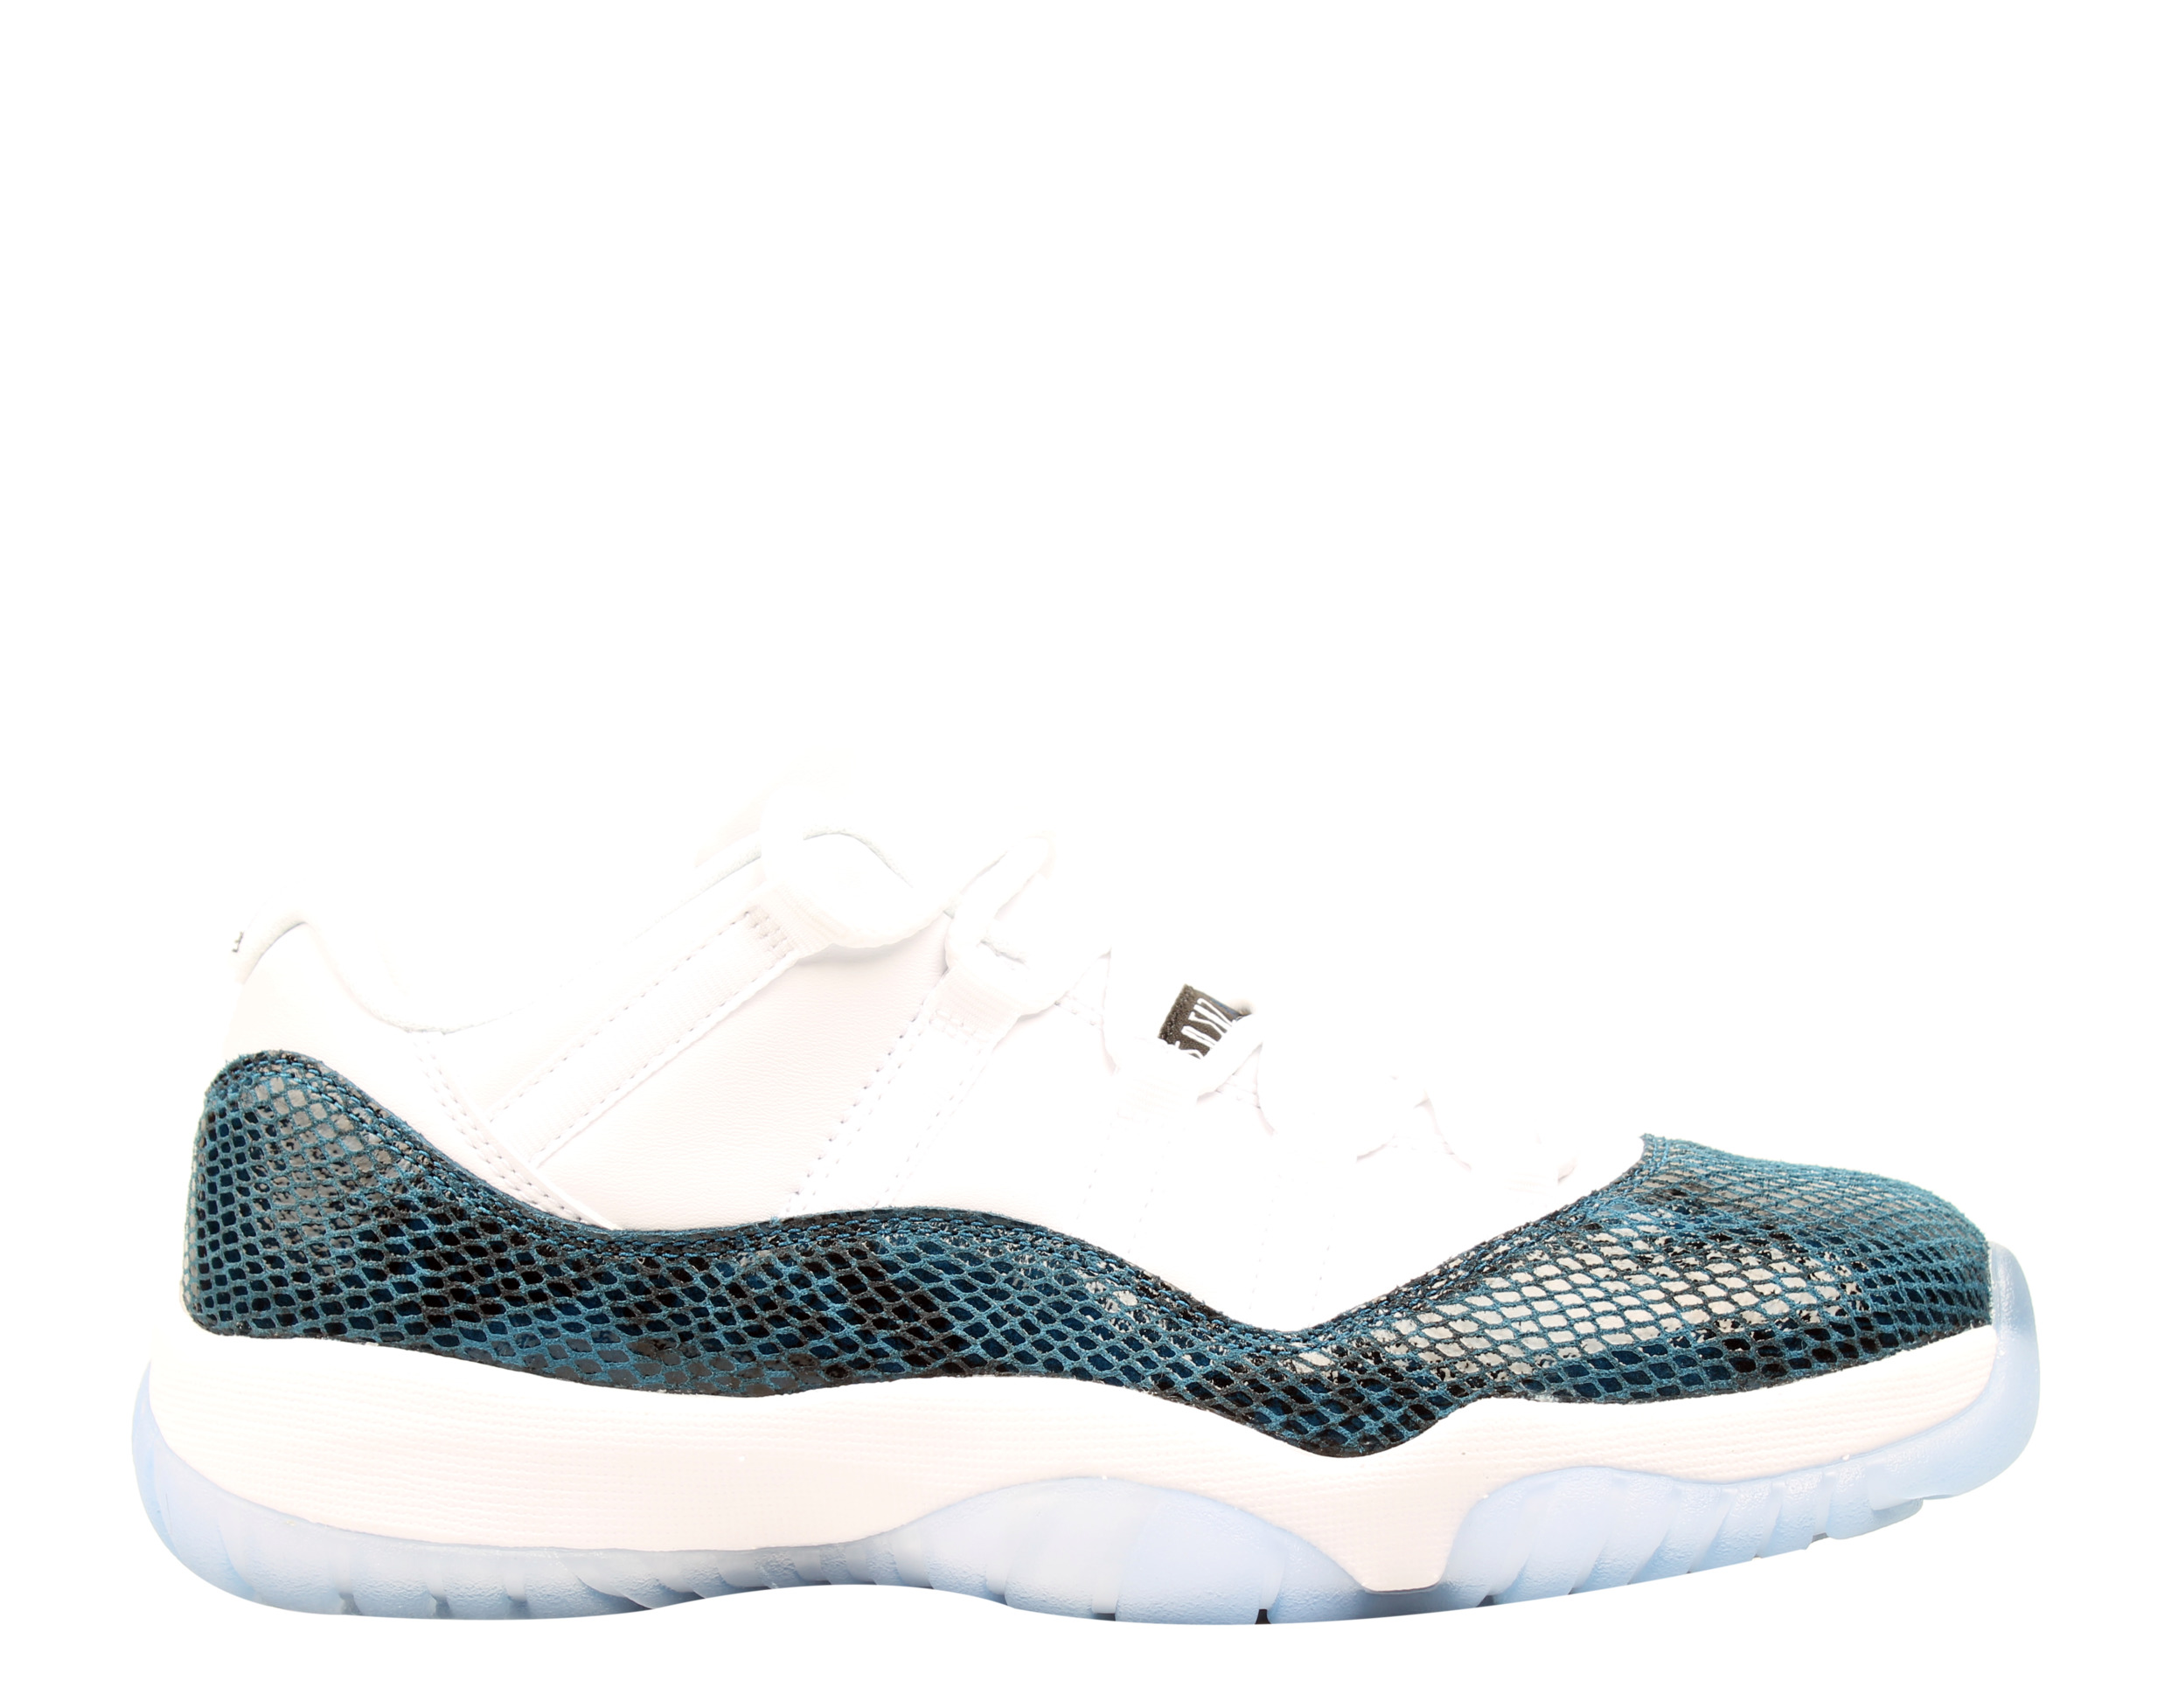 Nike Air Jordan 11 Retro Low LE Men's Basketball Shoes Size 14 - image 2 of 6